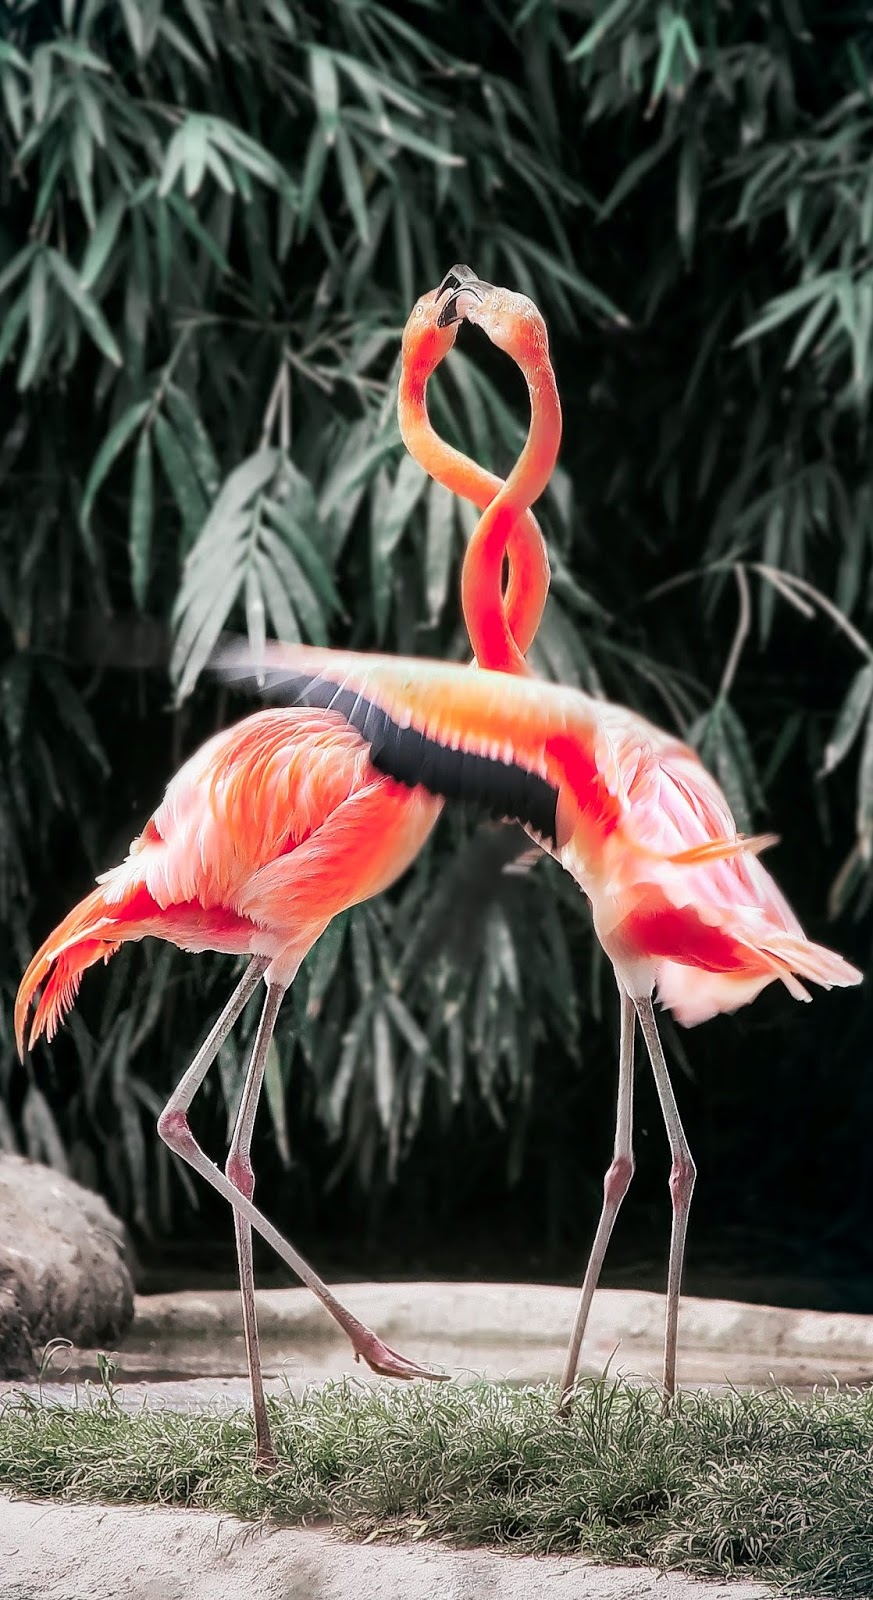 Amazing flamingo capture.